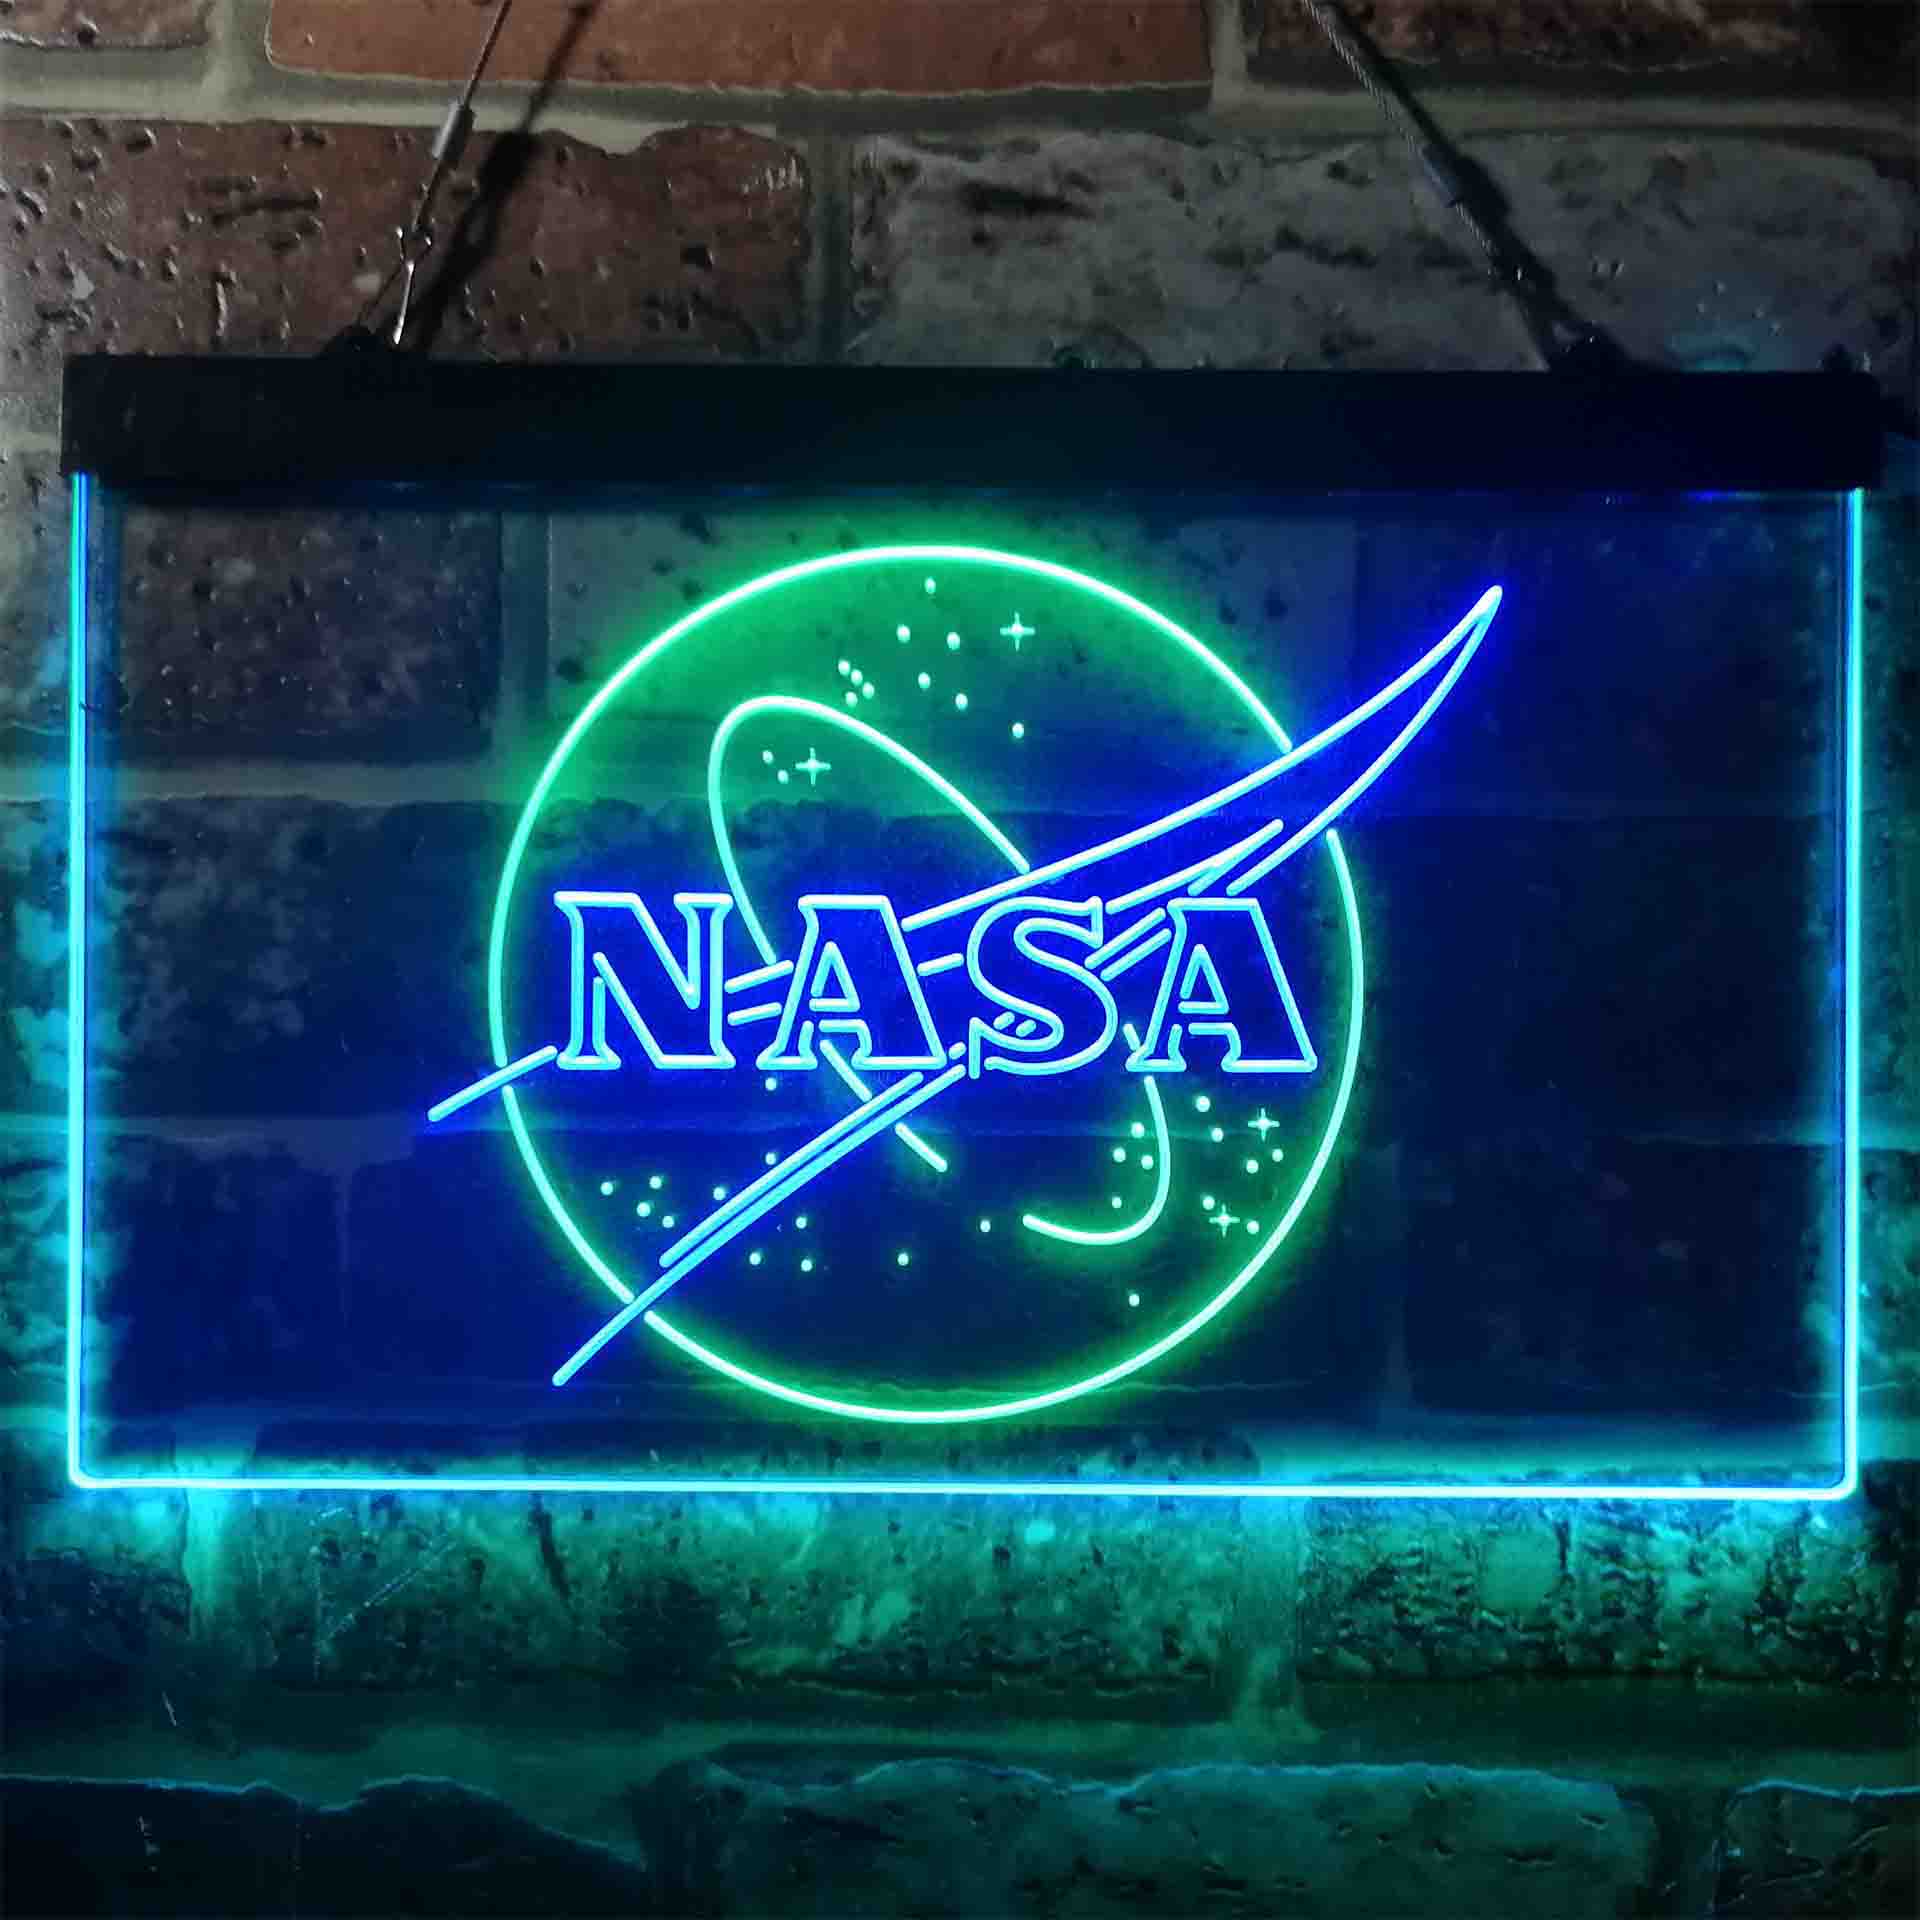 Nasa Space Rocket Planet Game Room Neon Light LED Sign